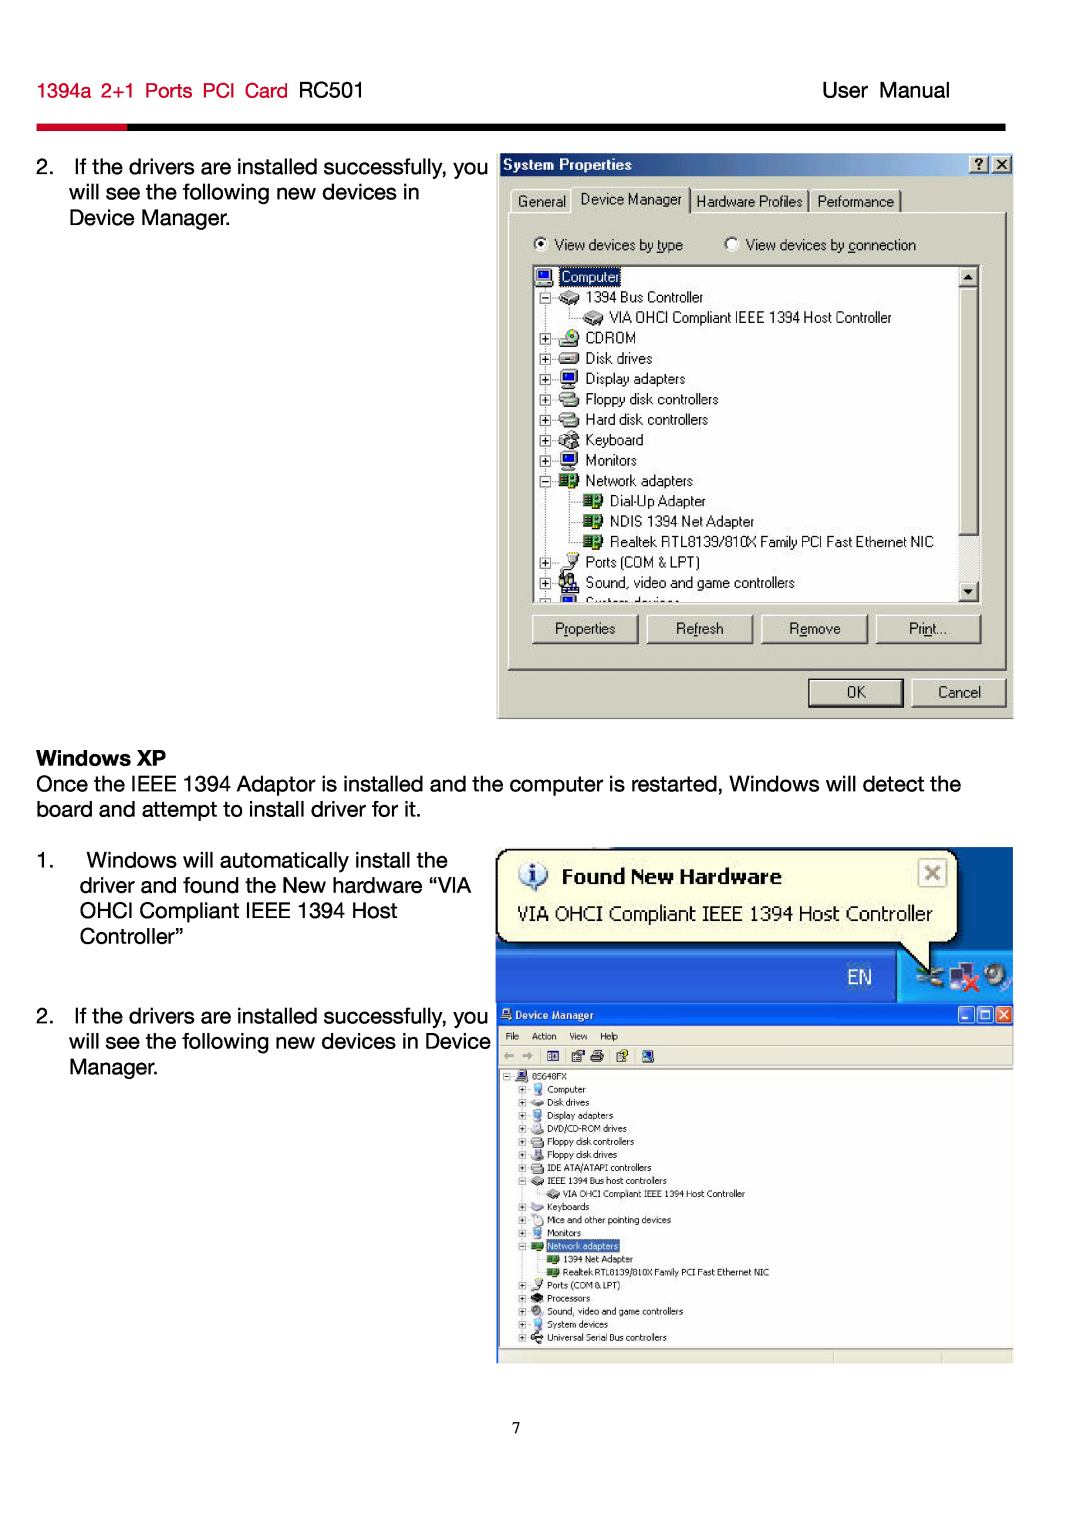 Rosewill RC501 user manual Windows XP 